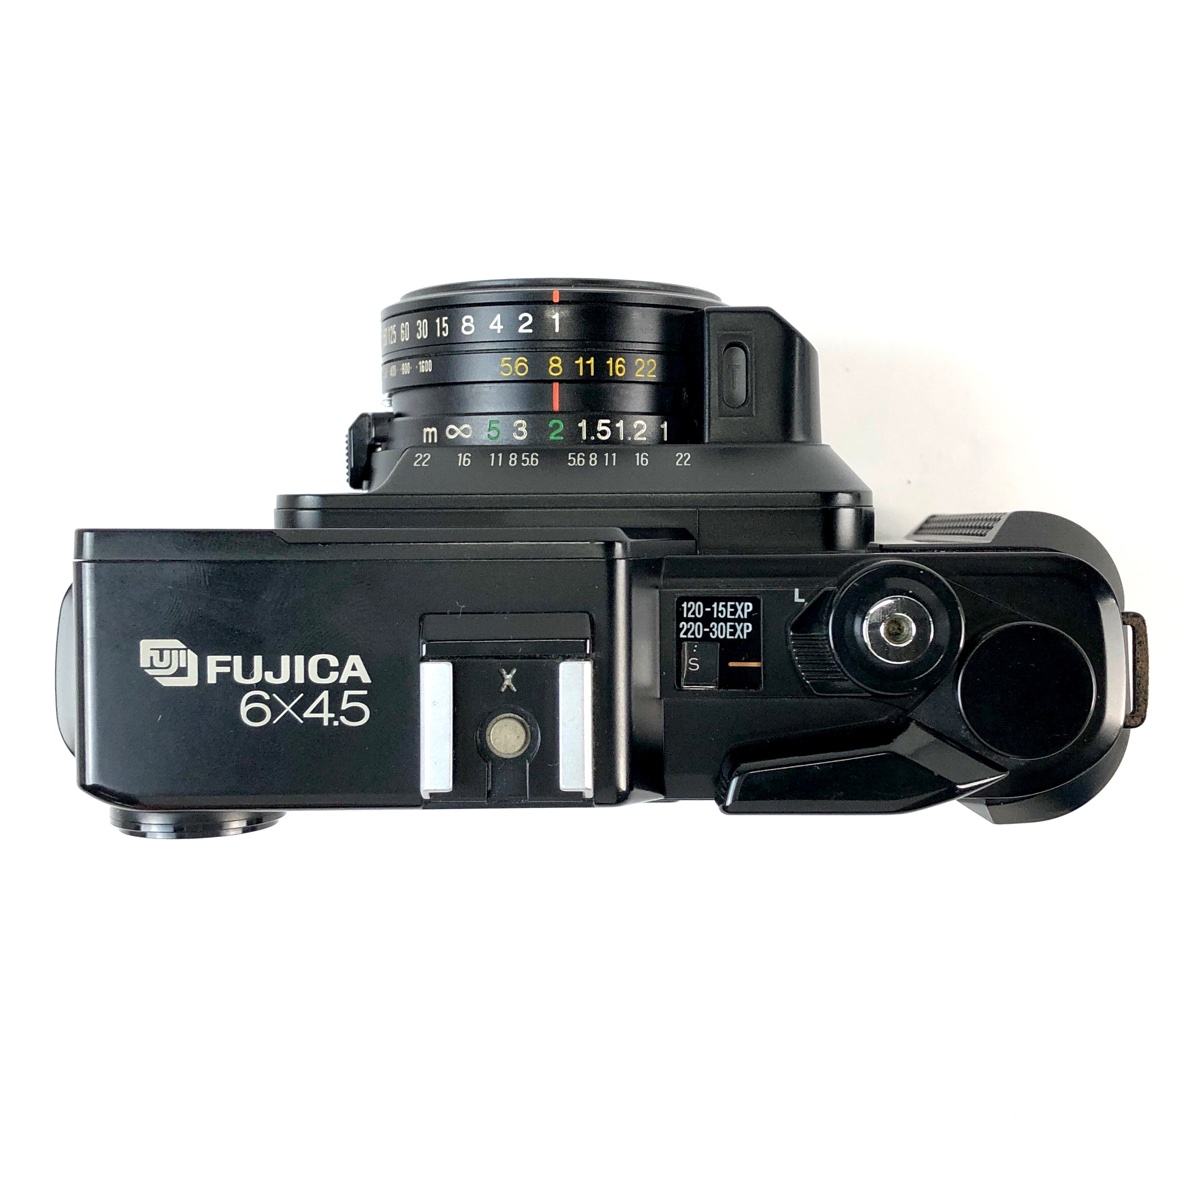  Fuji Film FUJIFILM FUJICA GA645W Professional средний размер камера б/у 